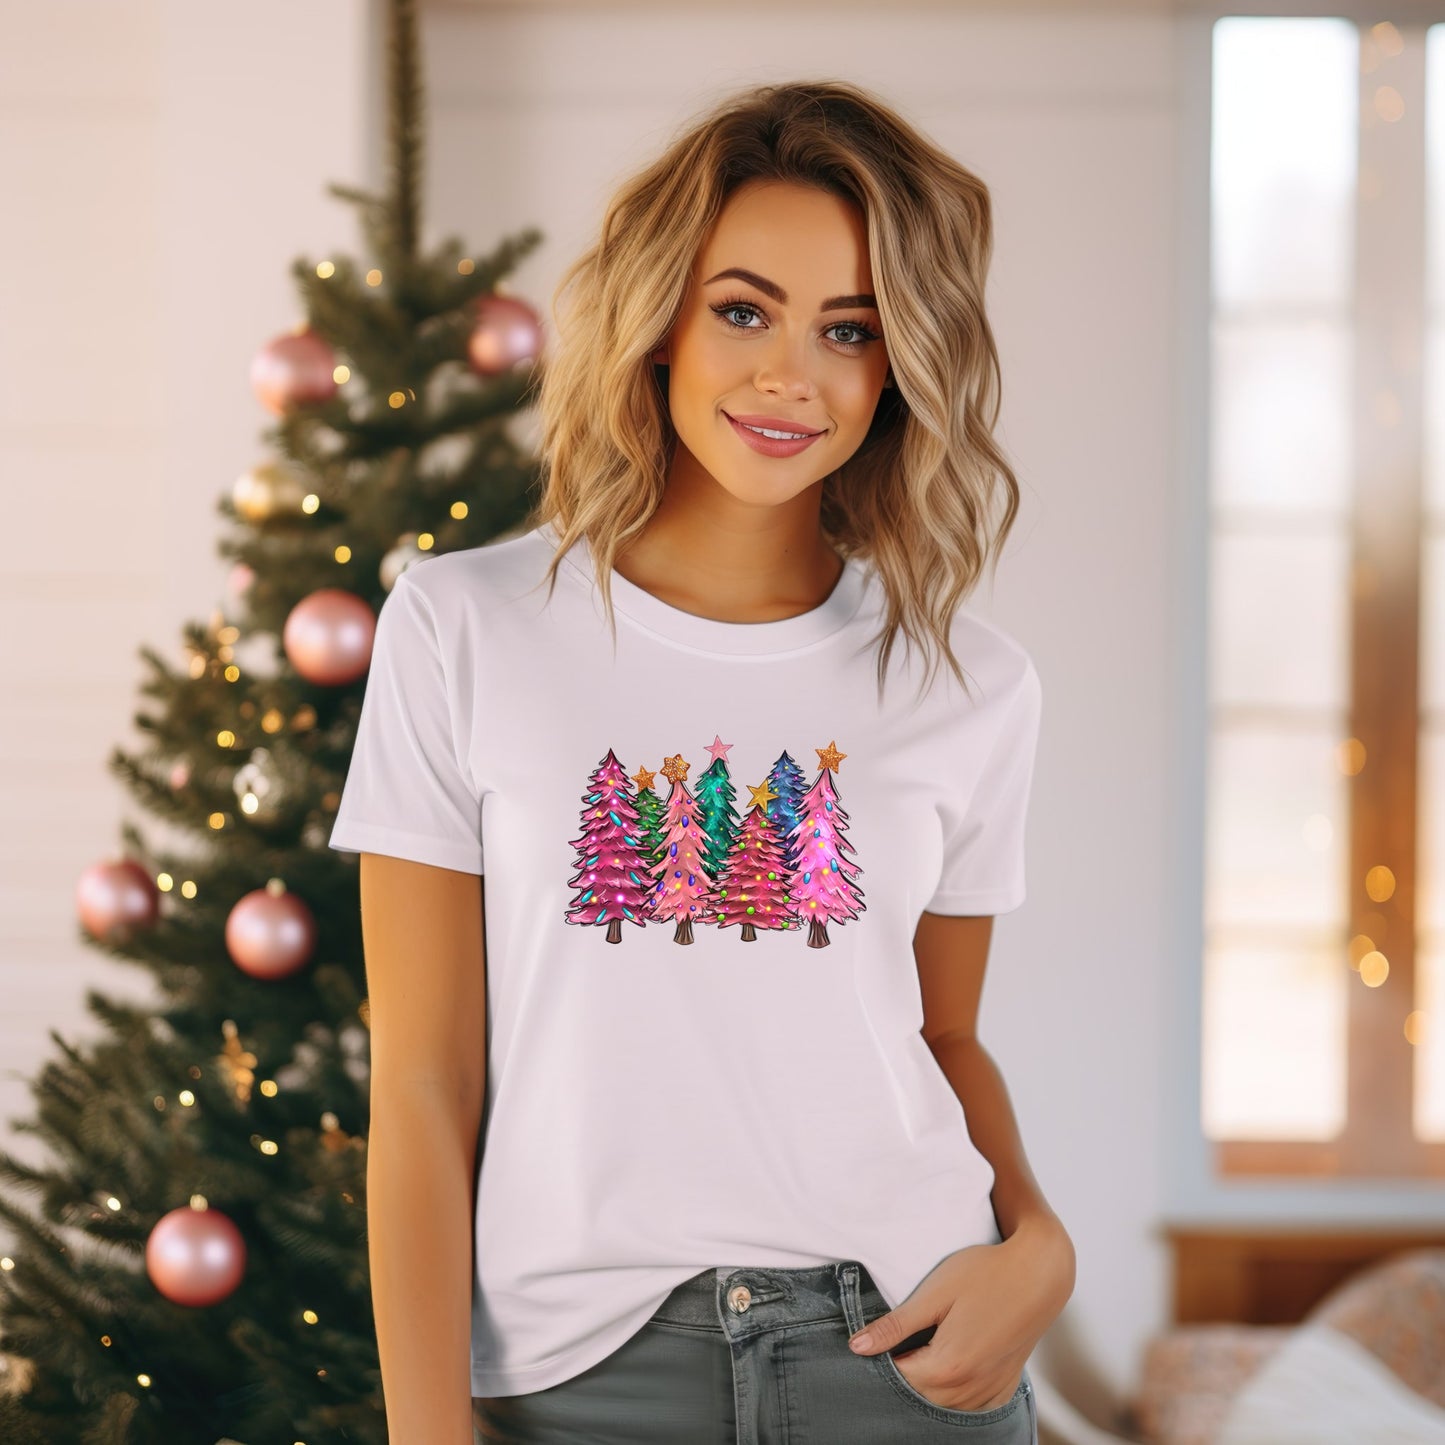 Organic cotton unisex t-shirt: Pink Christmas trees